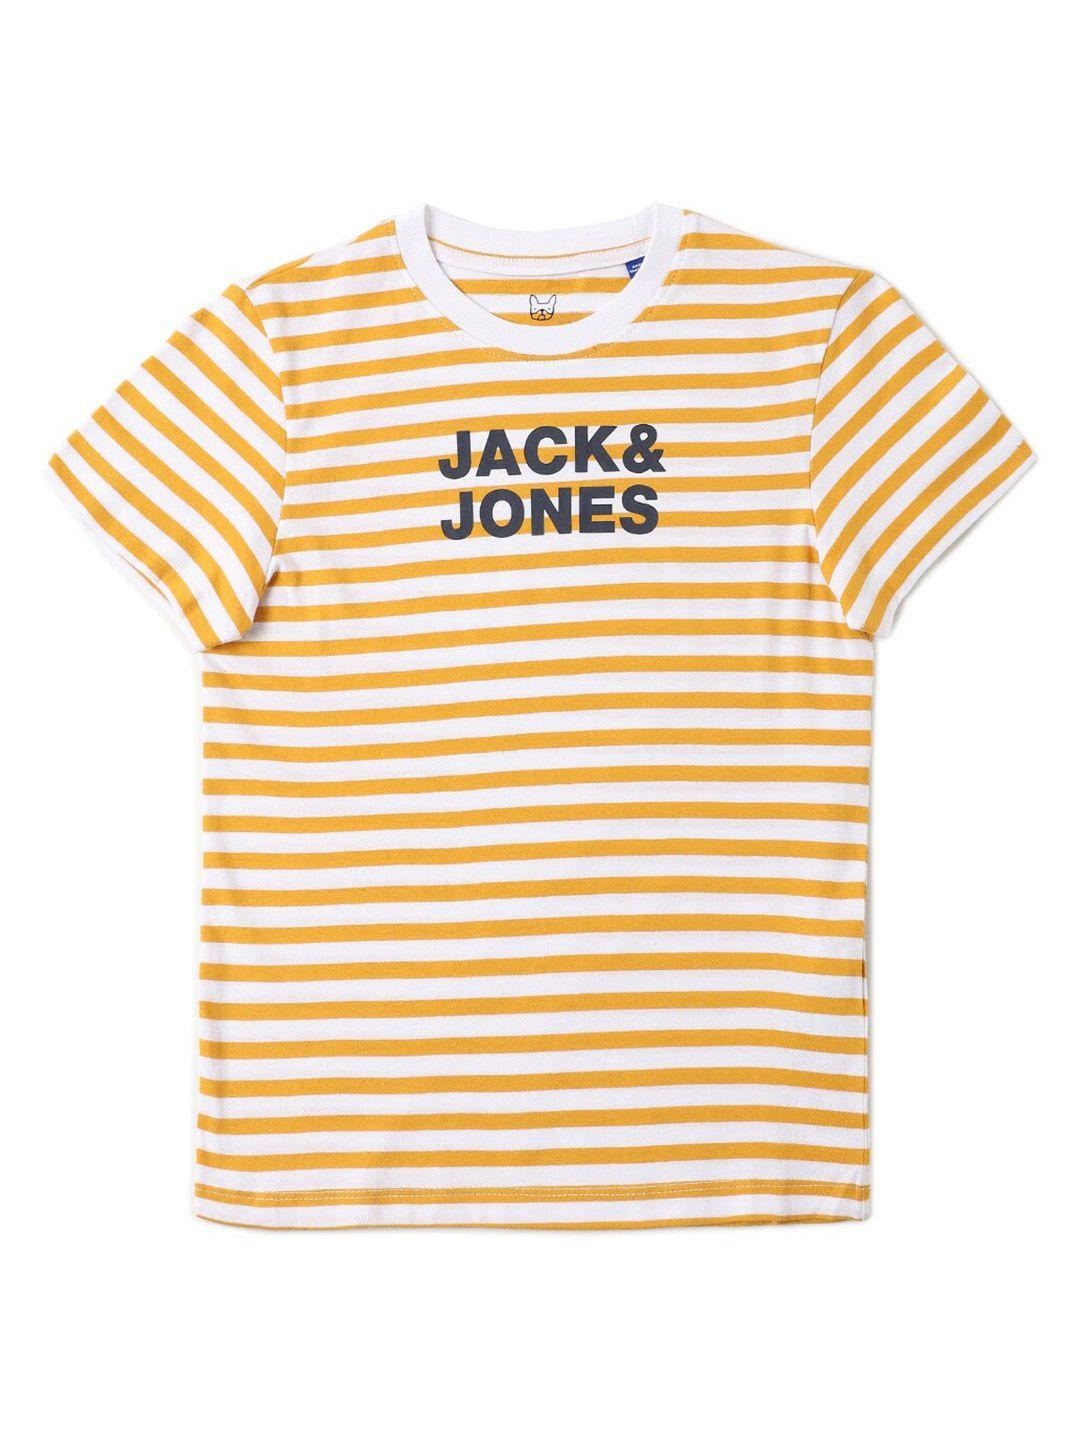 jack & jones boys yellow striped t-shirt